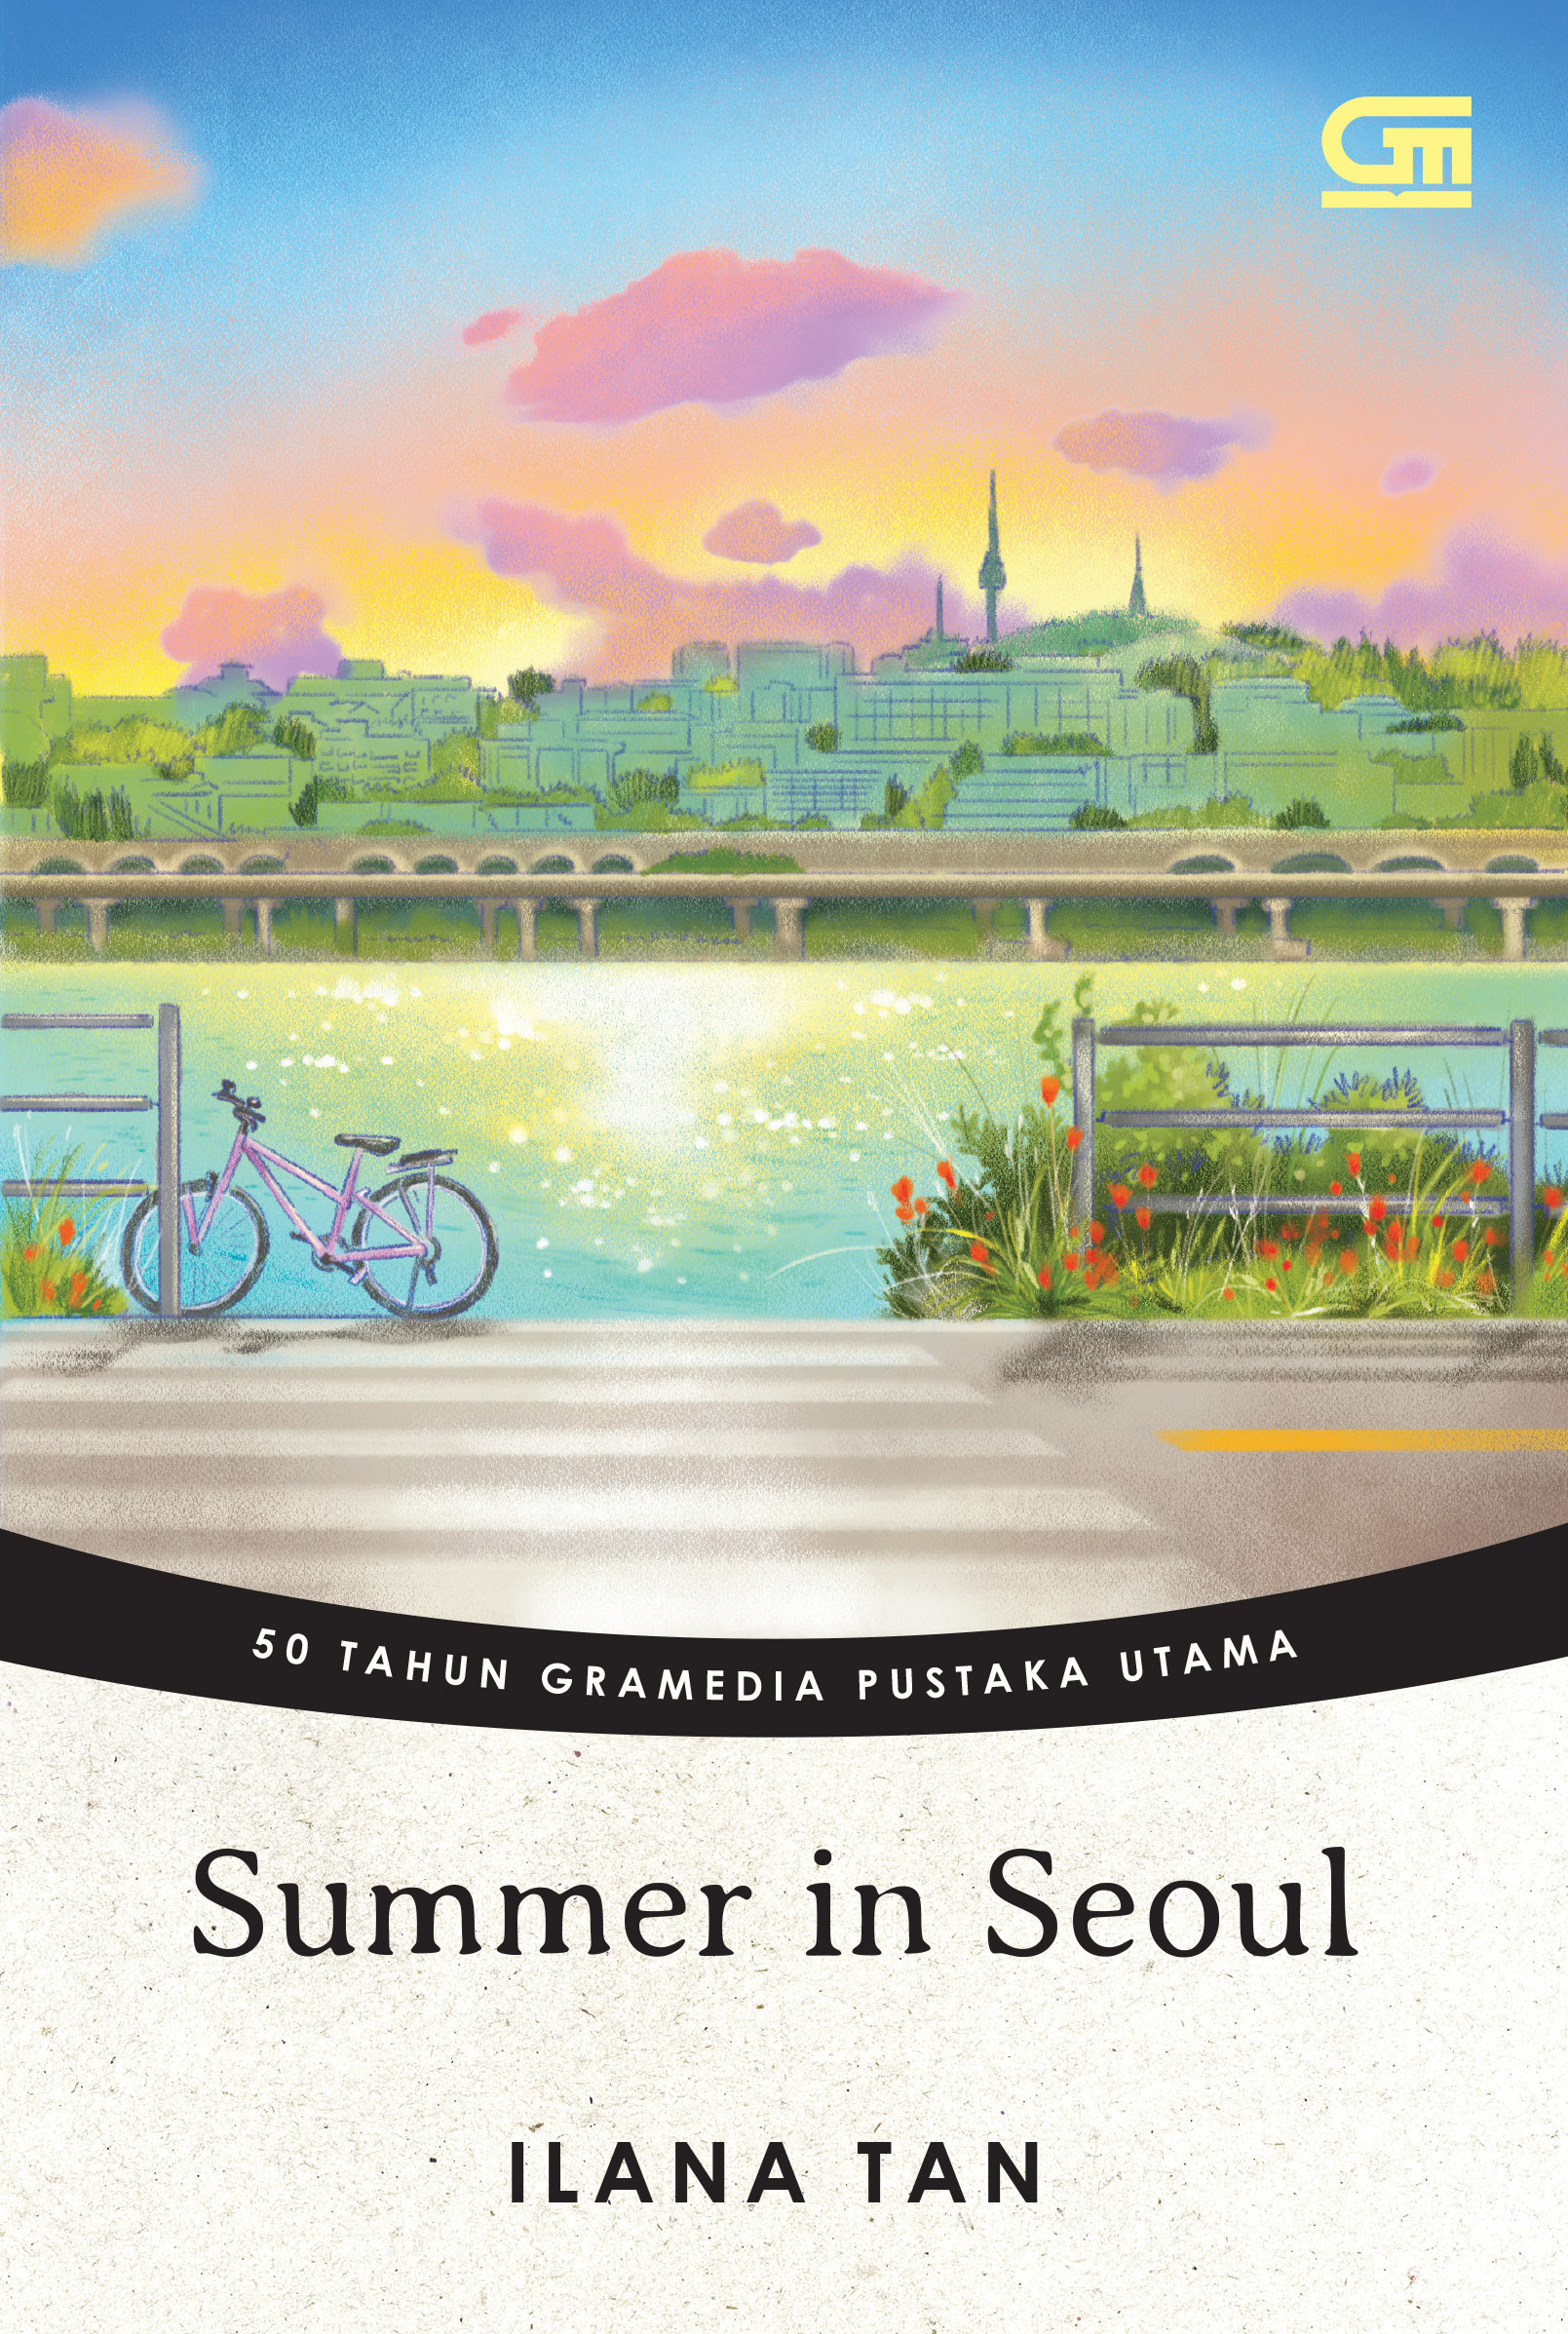 Summer in Seoul (Edisi 50 Tahun GPU)